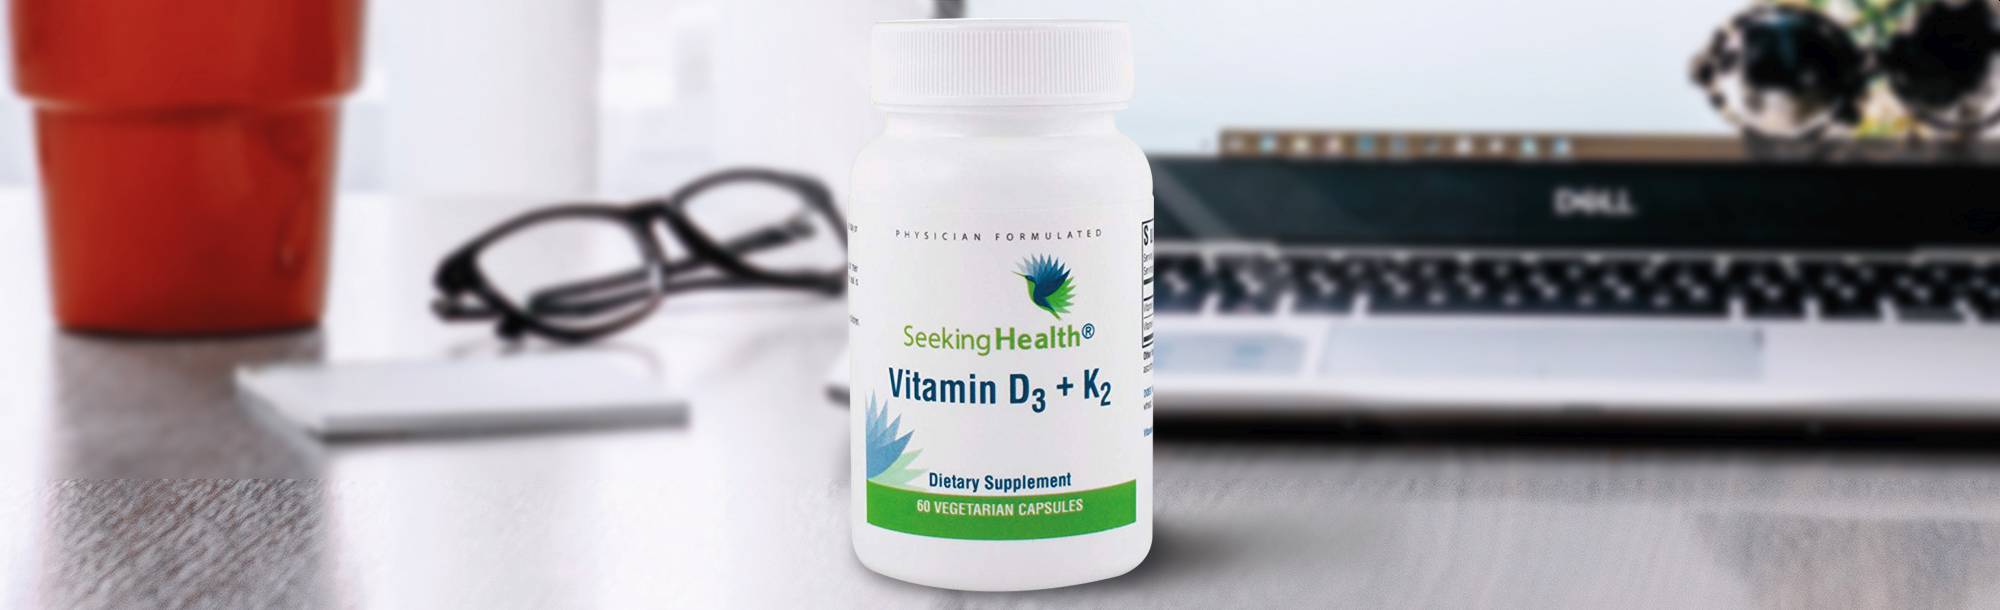 Seeking Health Vitamin D3 + K2 Review